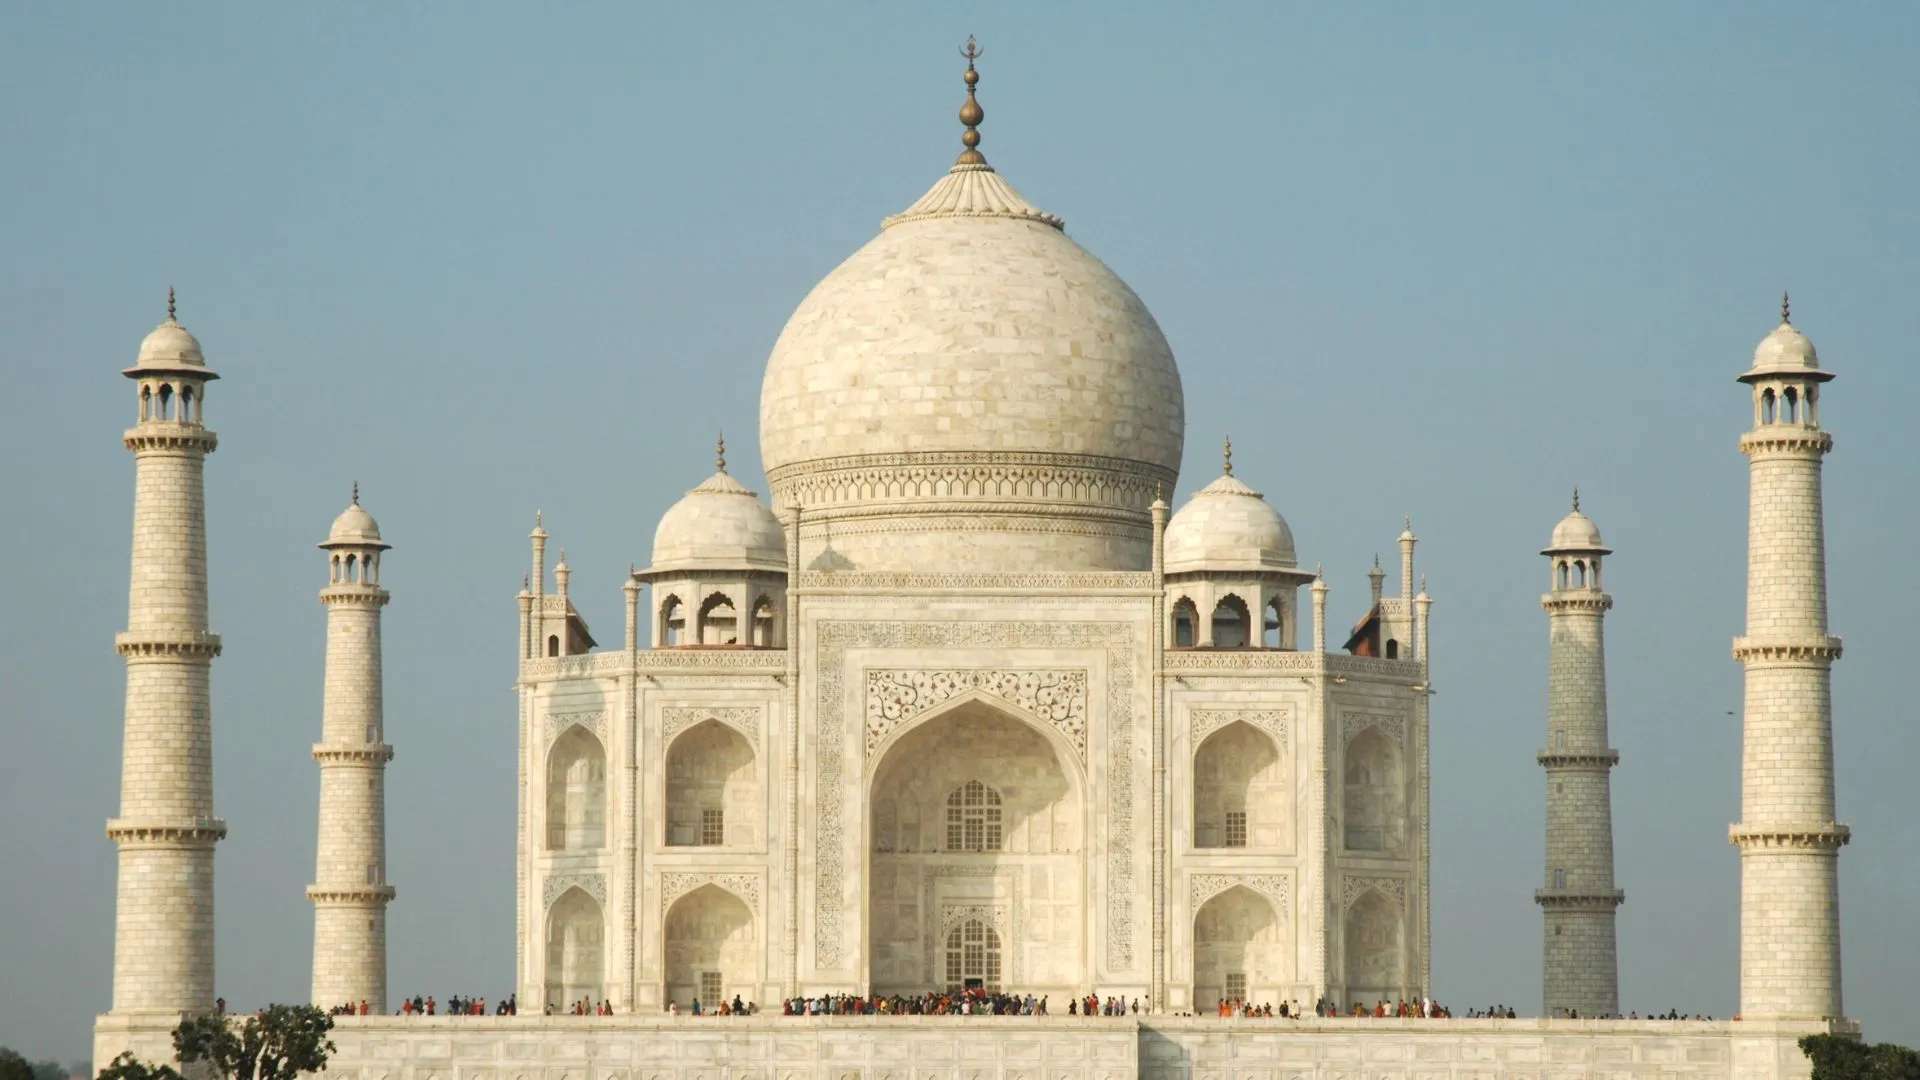 Architecture and design of Taj Mahal